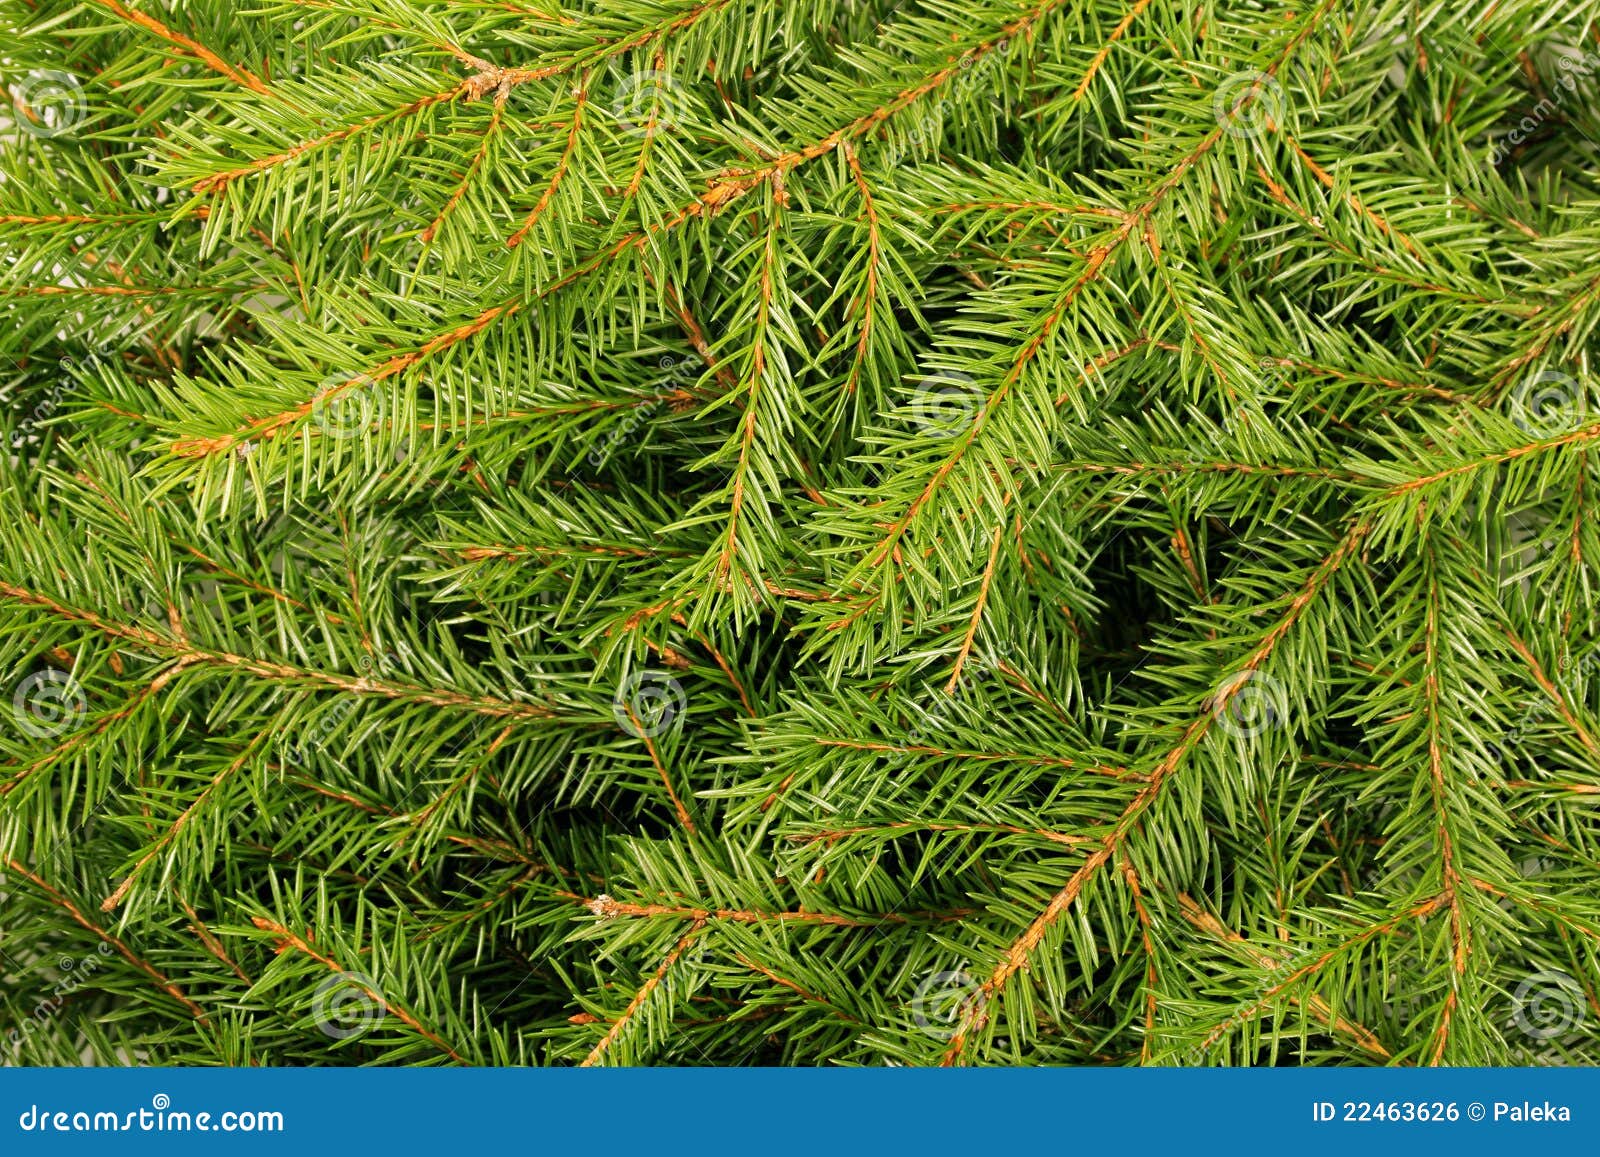 Pine Tree Allergy | Causes, Symptoms & Treatment | ACAAI ...